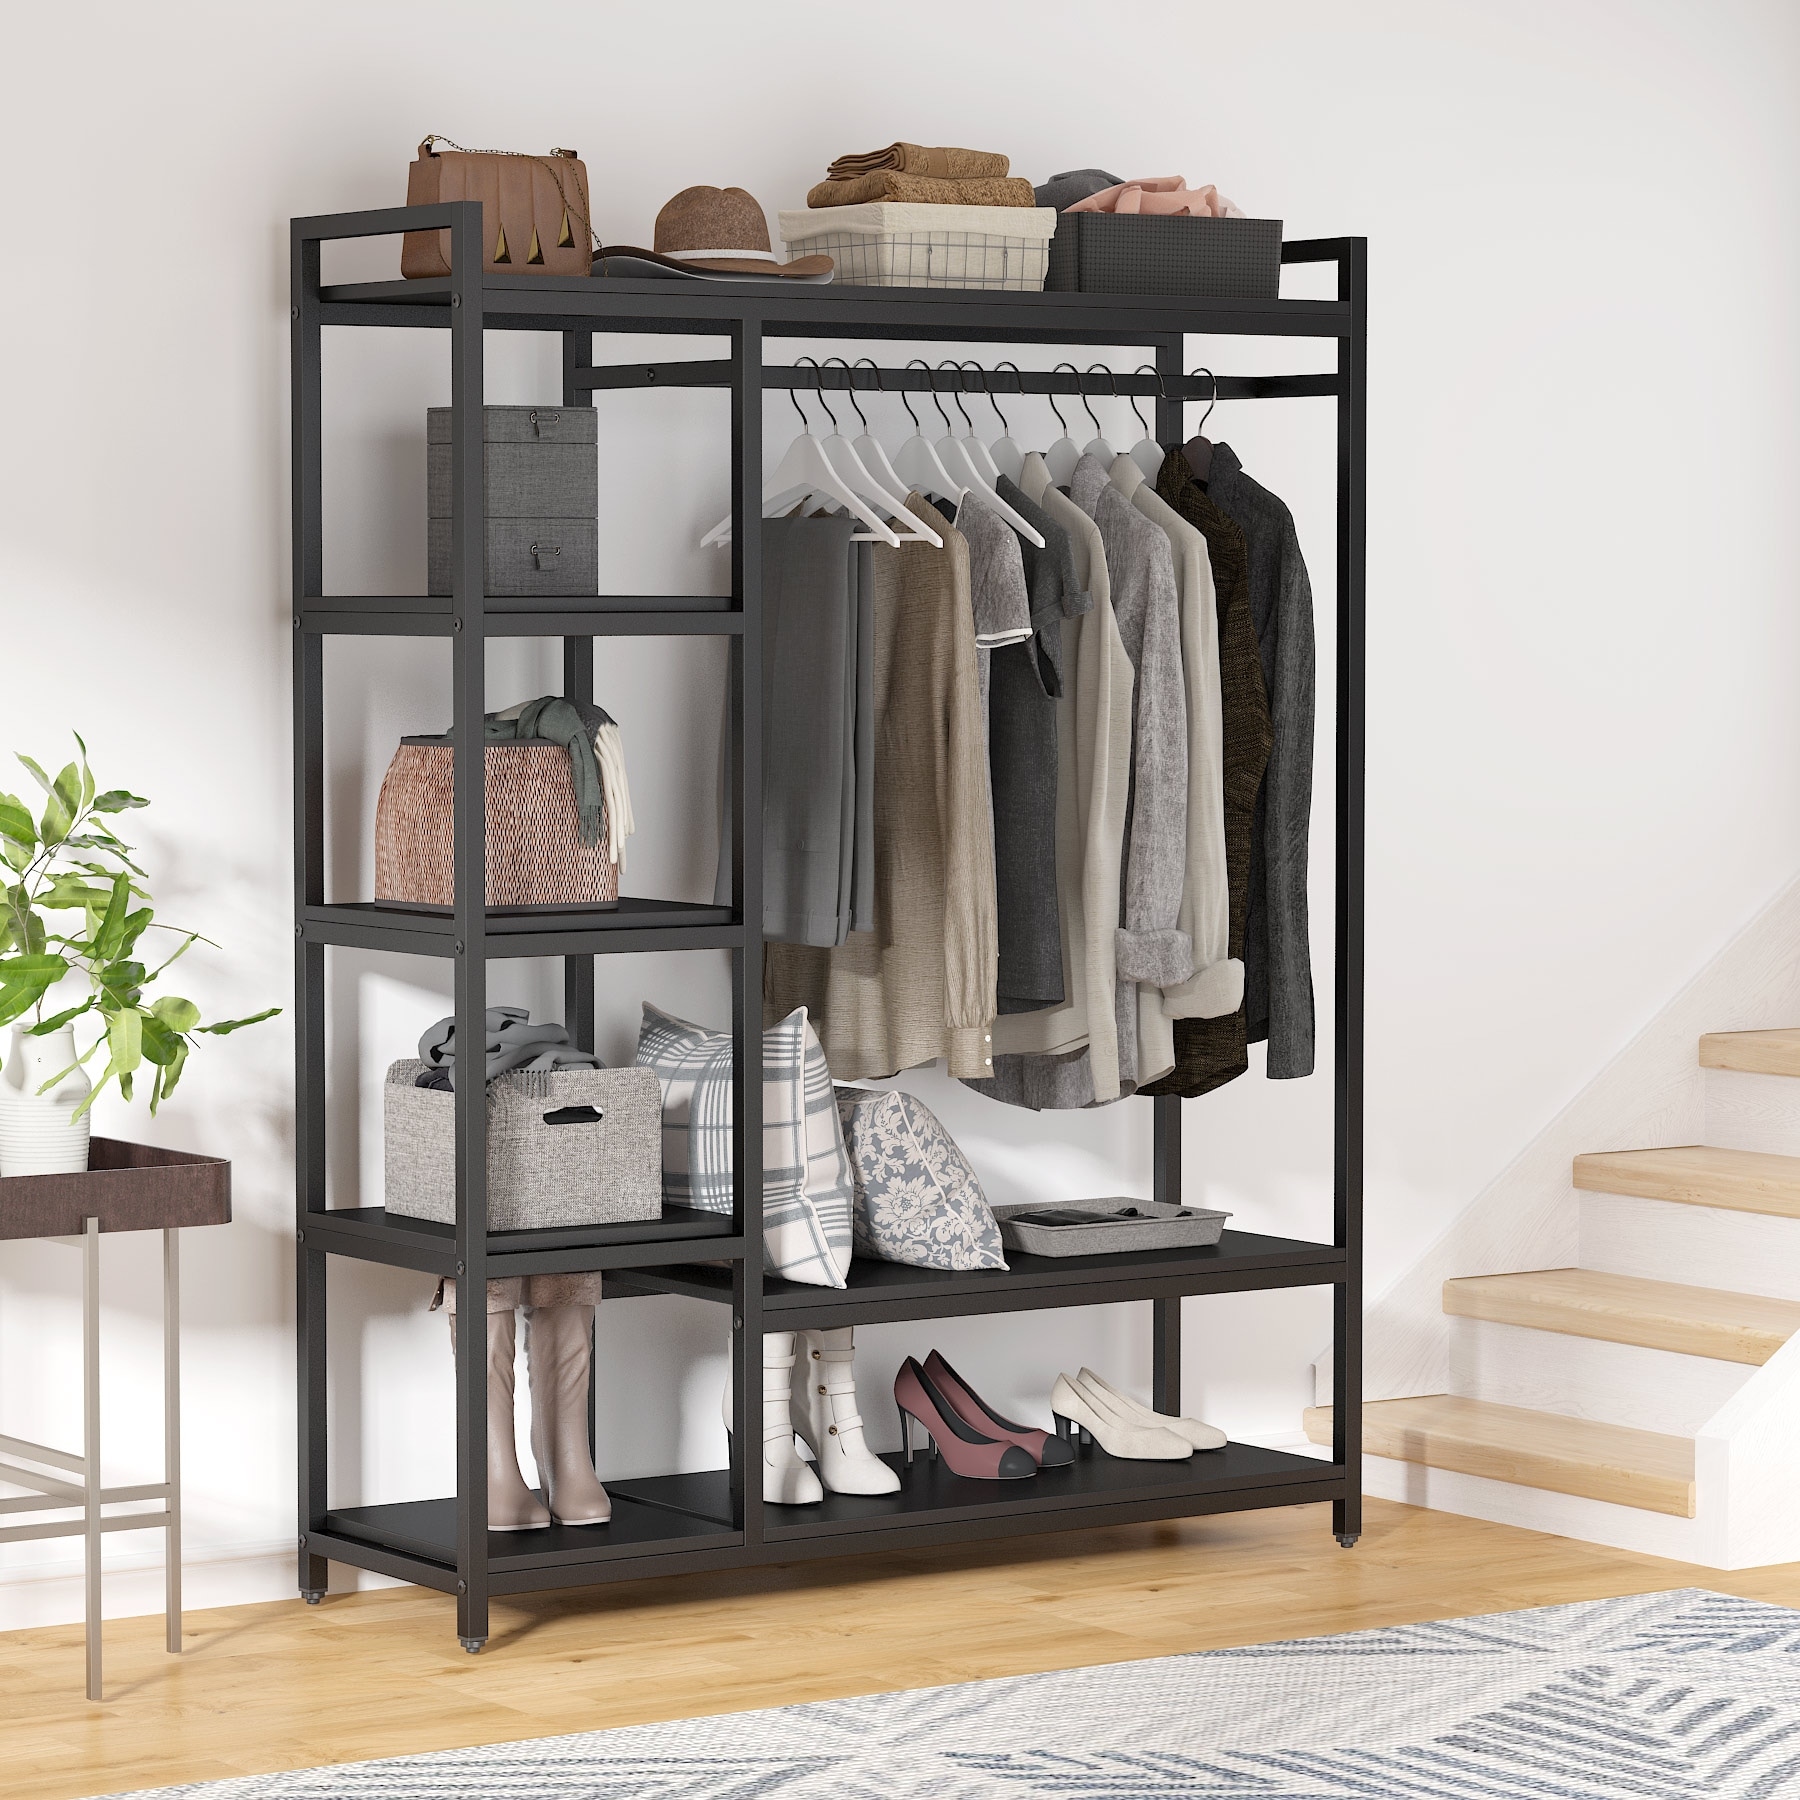 https://ak1.ostkcdn.com/images/products/is/images/direct/551769b6b10db4af5a48ab10001a30e5af843c49/Free-standing-Closet-Organizer-Garment-Rack-with-6-Shelf-1-Hanging-Bar.jpg